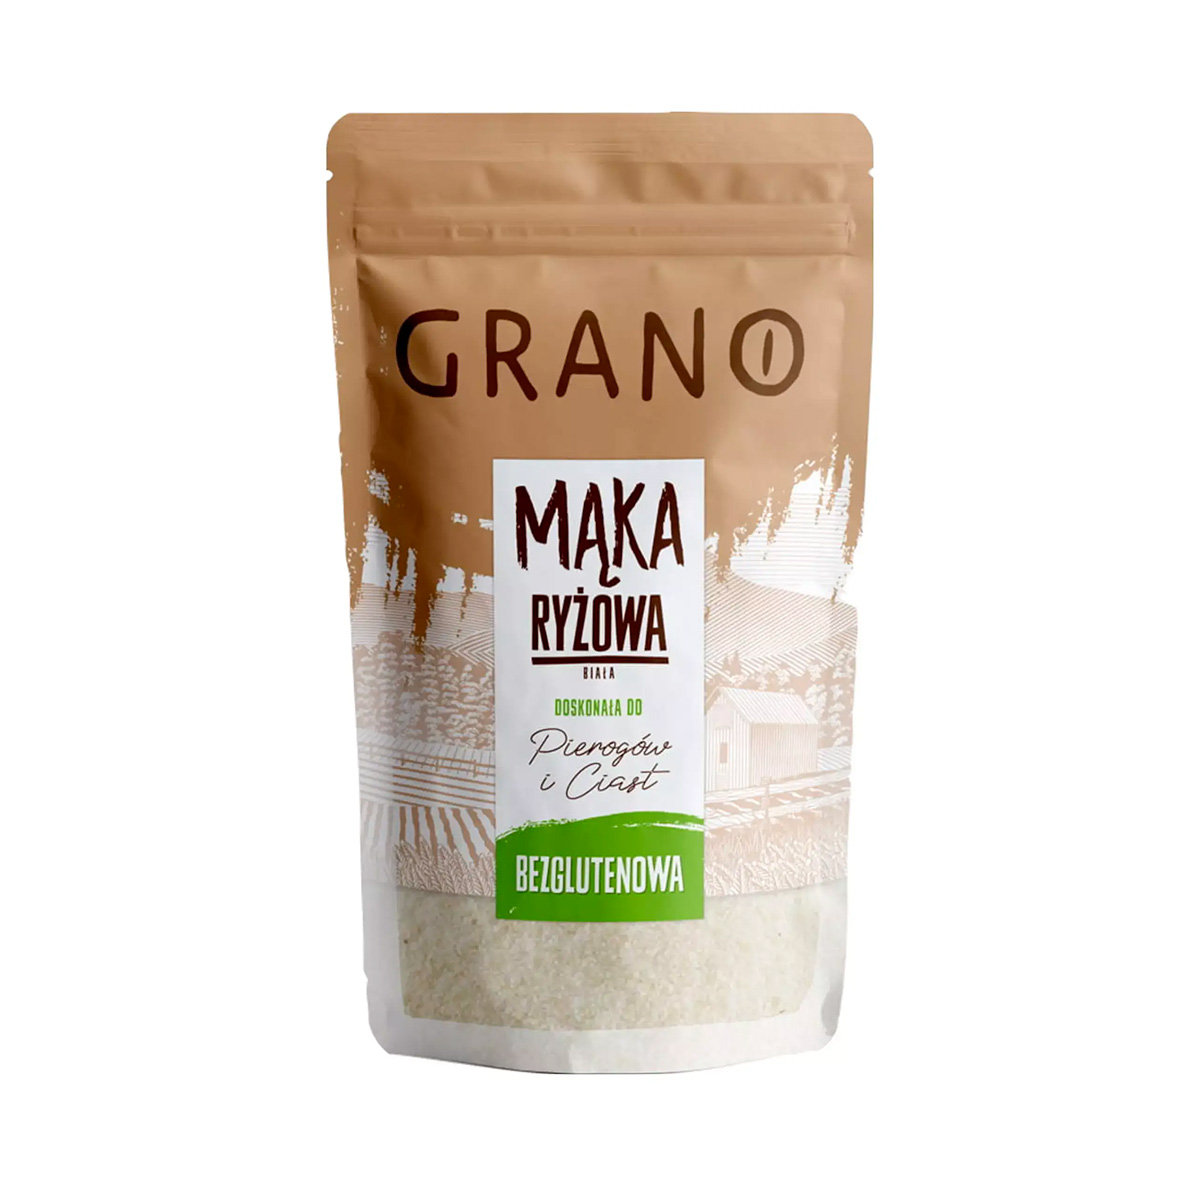 Grano Mąka ryżowa biała bezglutenowa 500g Grano MĄKA RYŻOWA